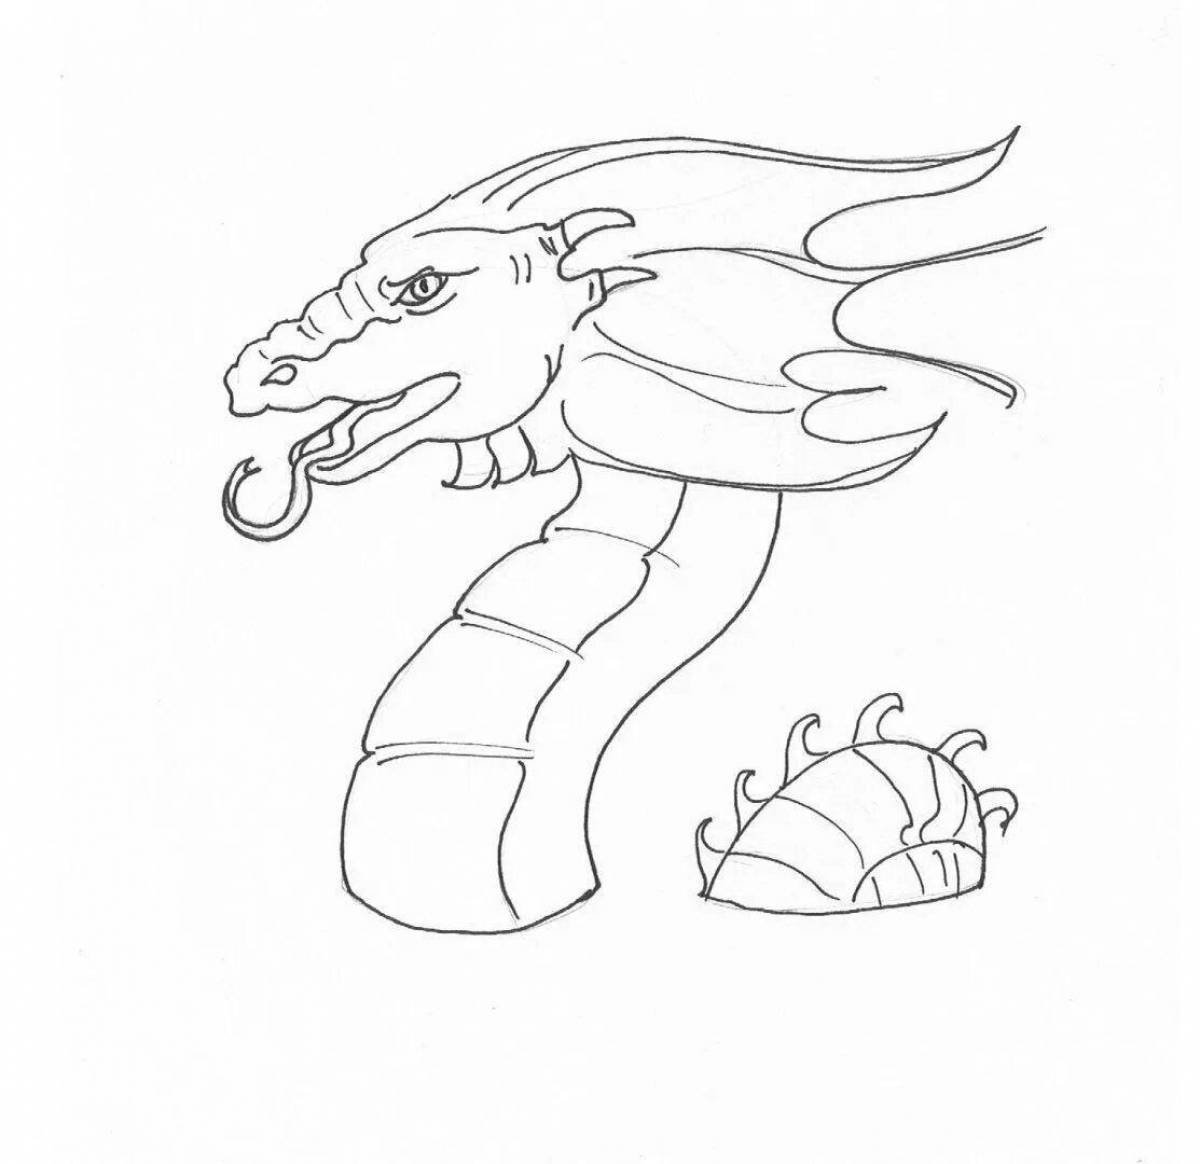 Great dragon head coloring book